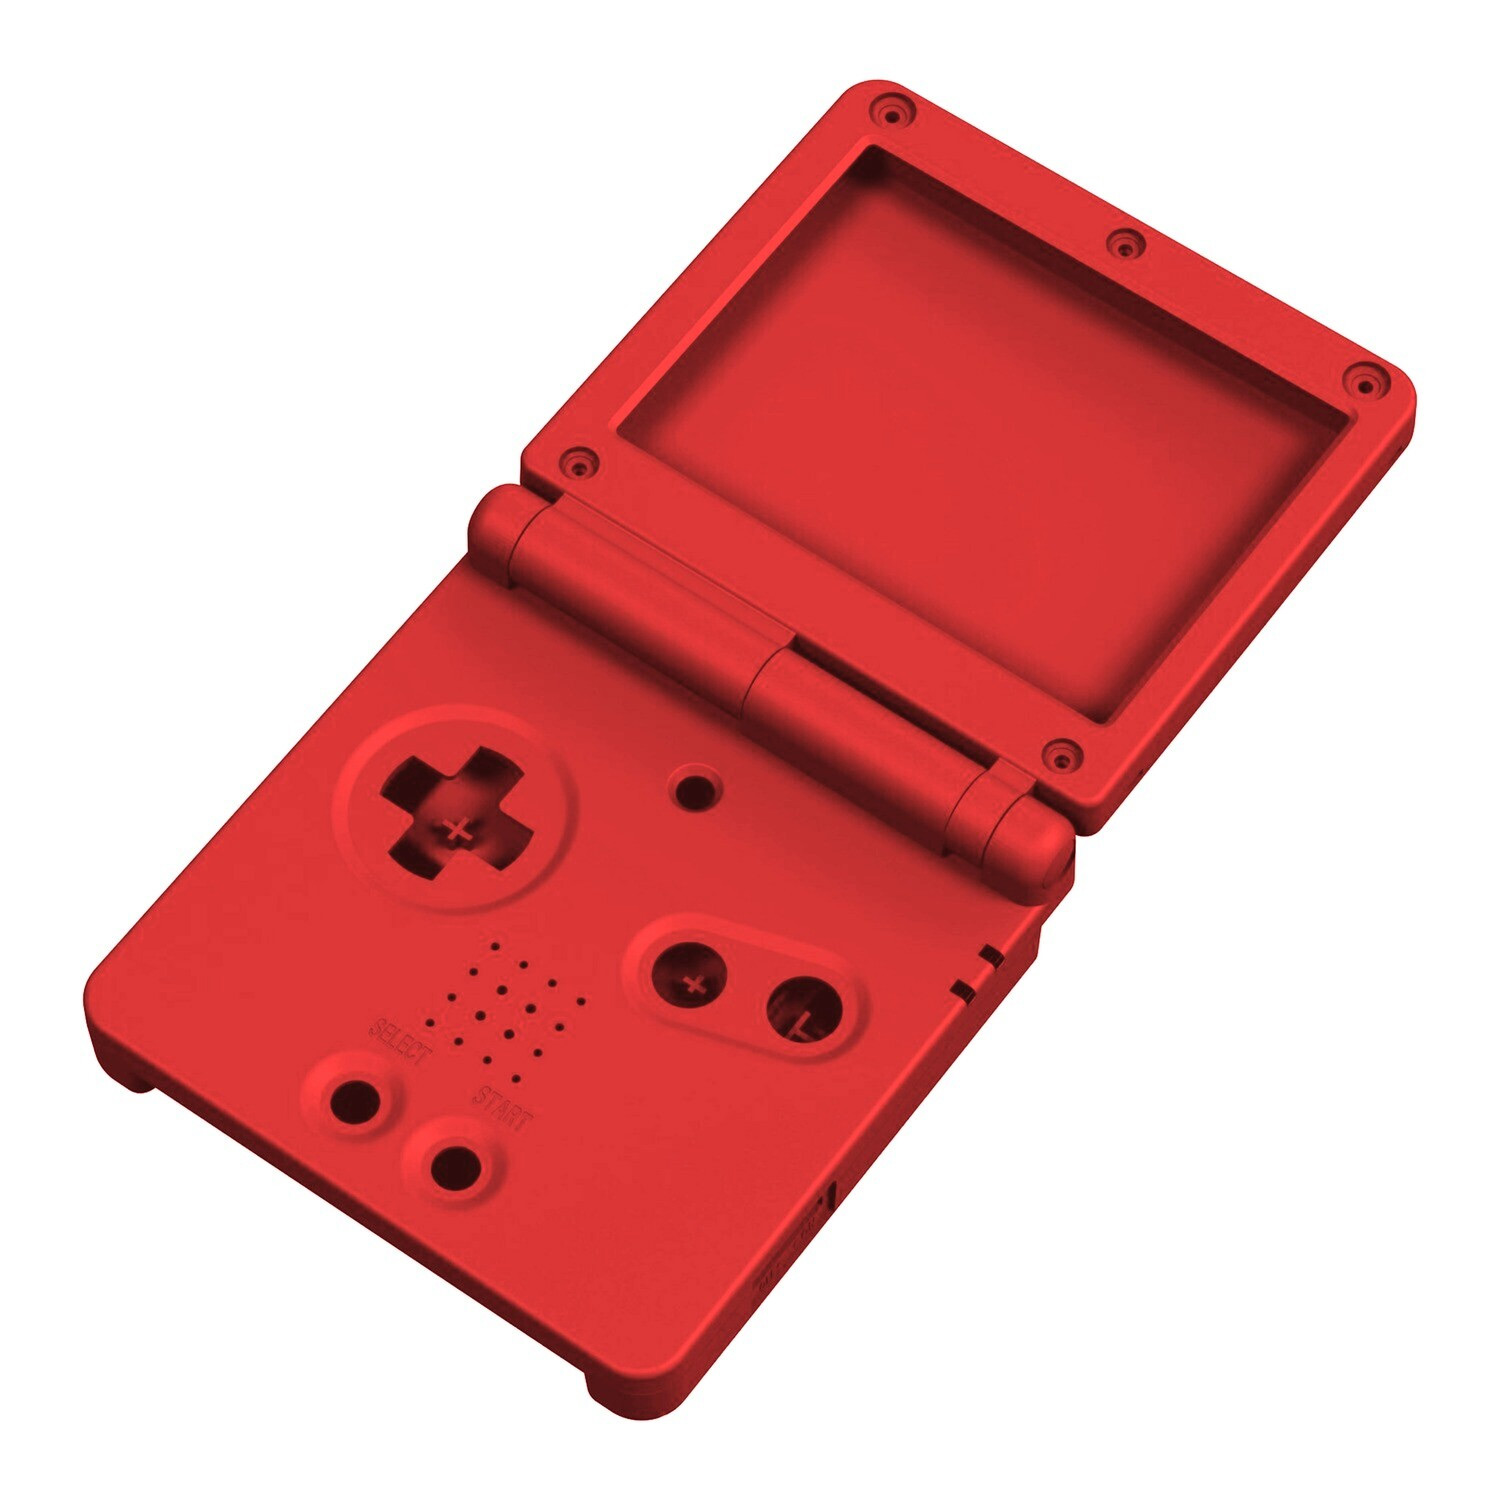 Game Boy Advance SP etui (Stevig rood)